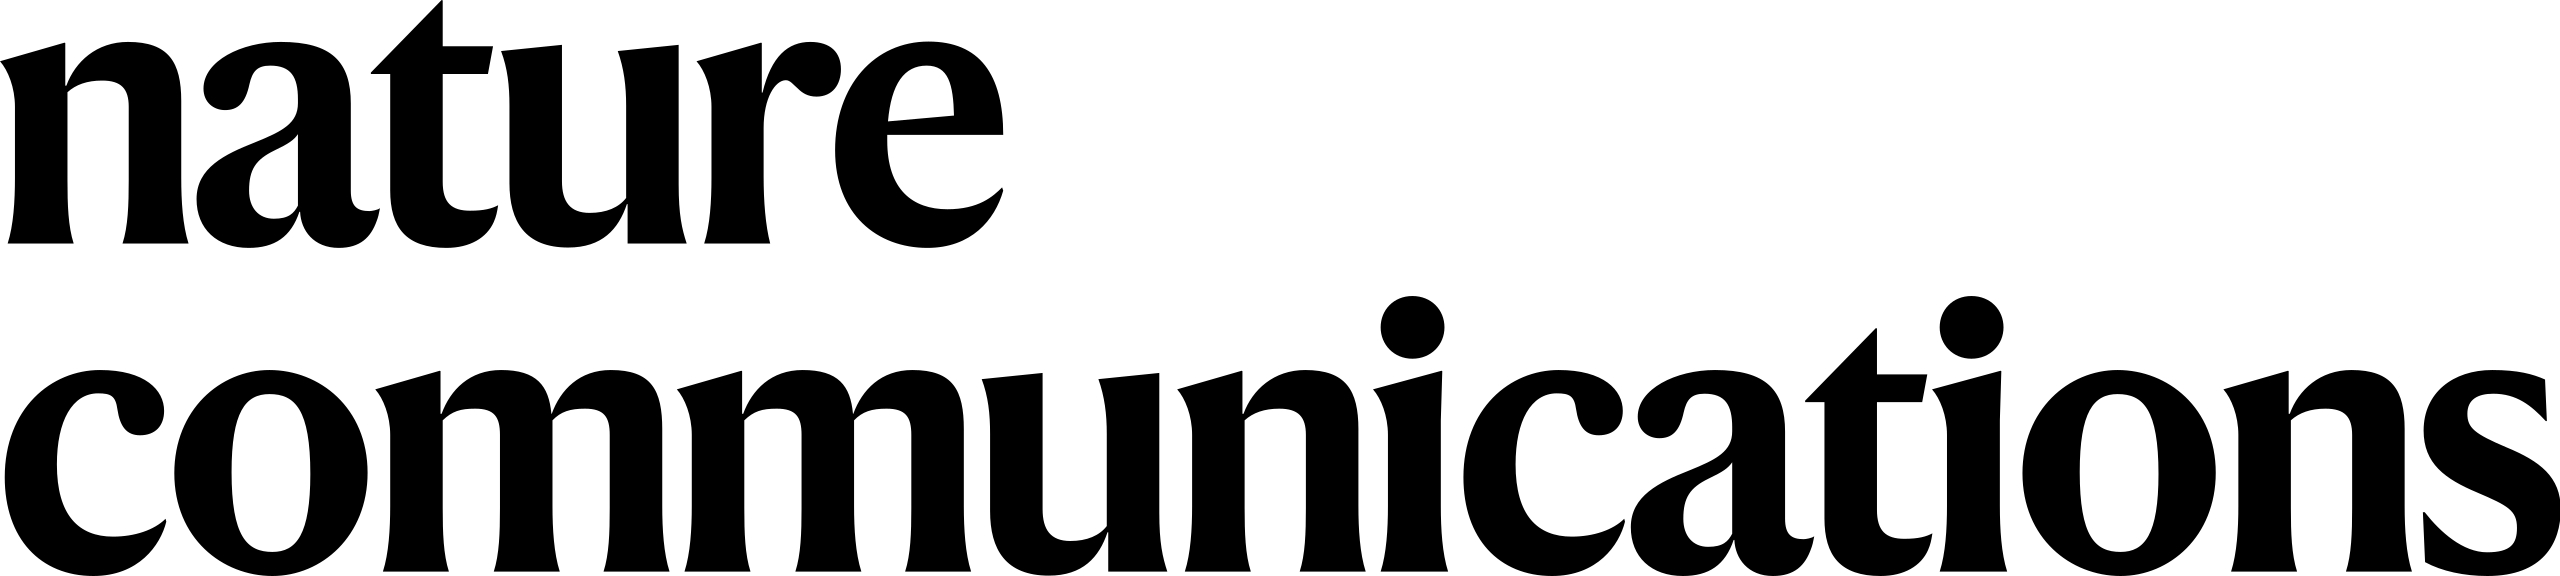 Nature Communications Logo.svg